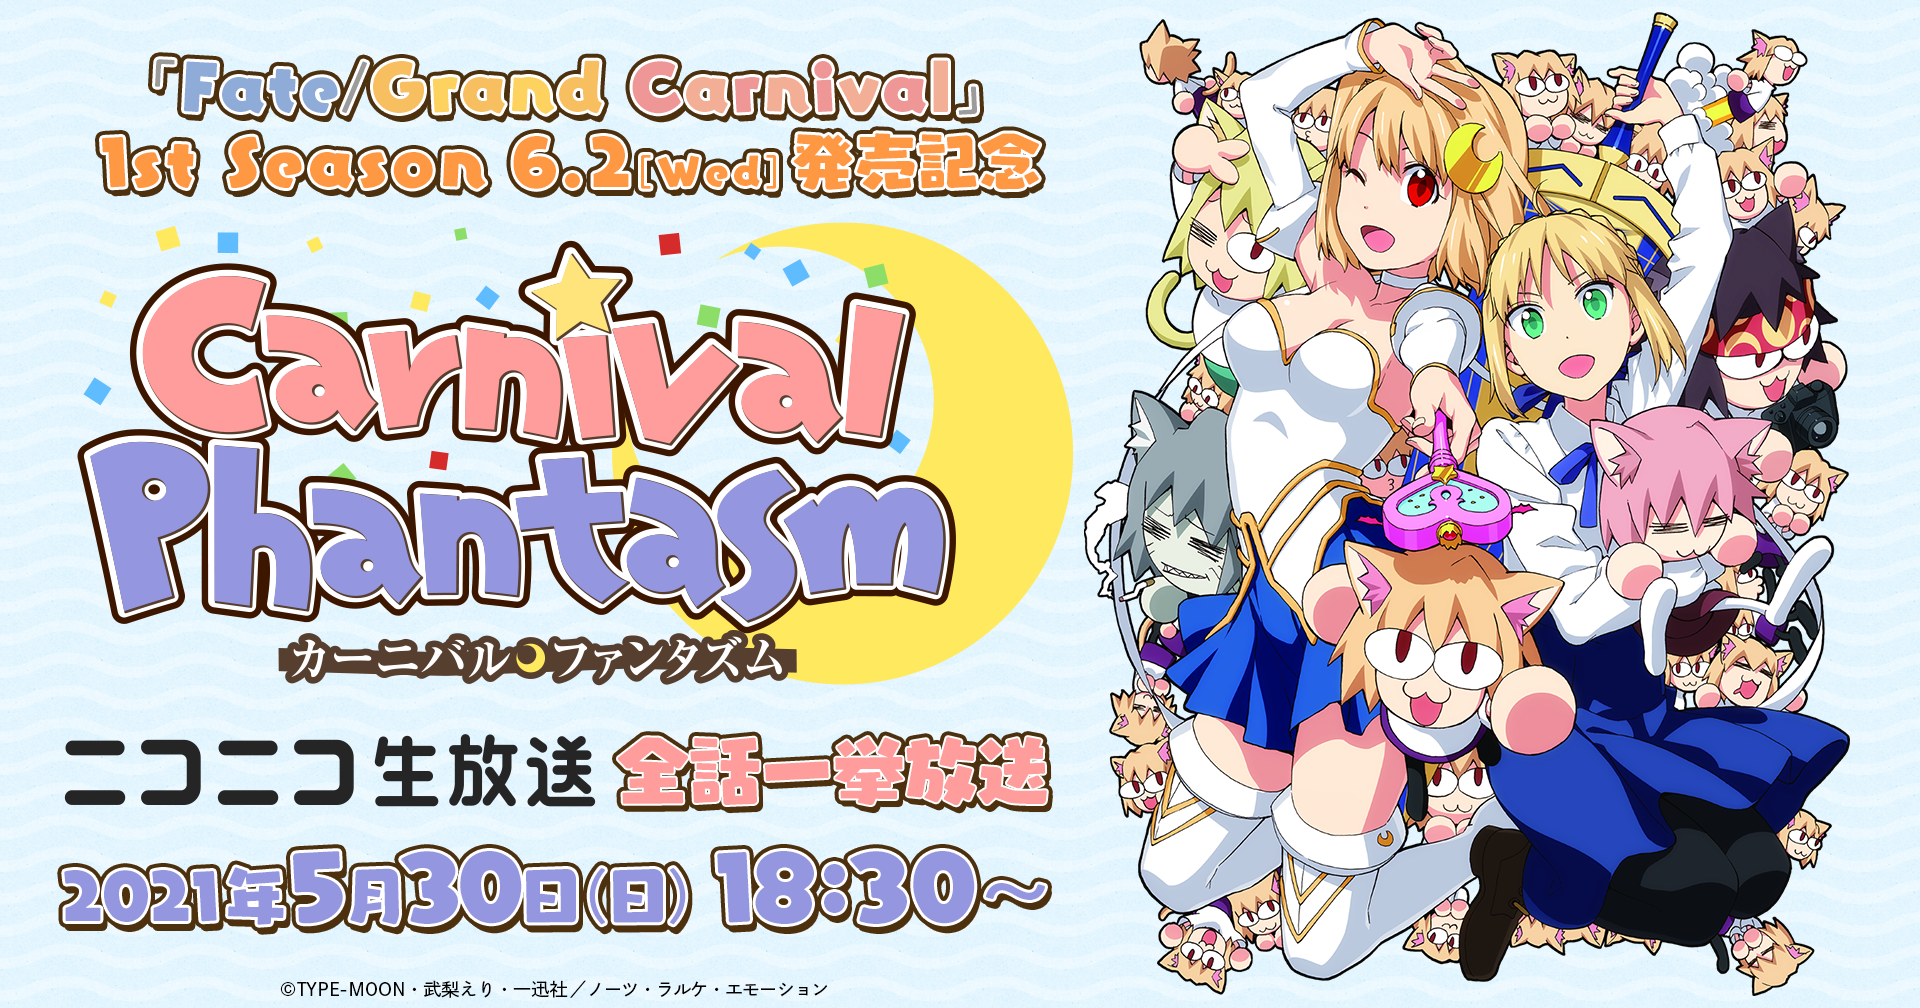 Ova Fate Grand Carnival 1st Season発売記念 カーニバル ファンタズム ニコ生 全話一挙放送が決定 株式会社アニプレックスのプレスリリース